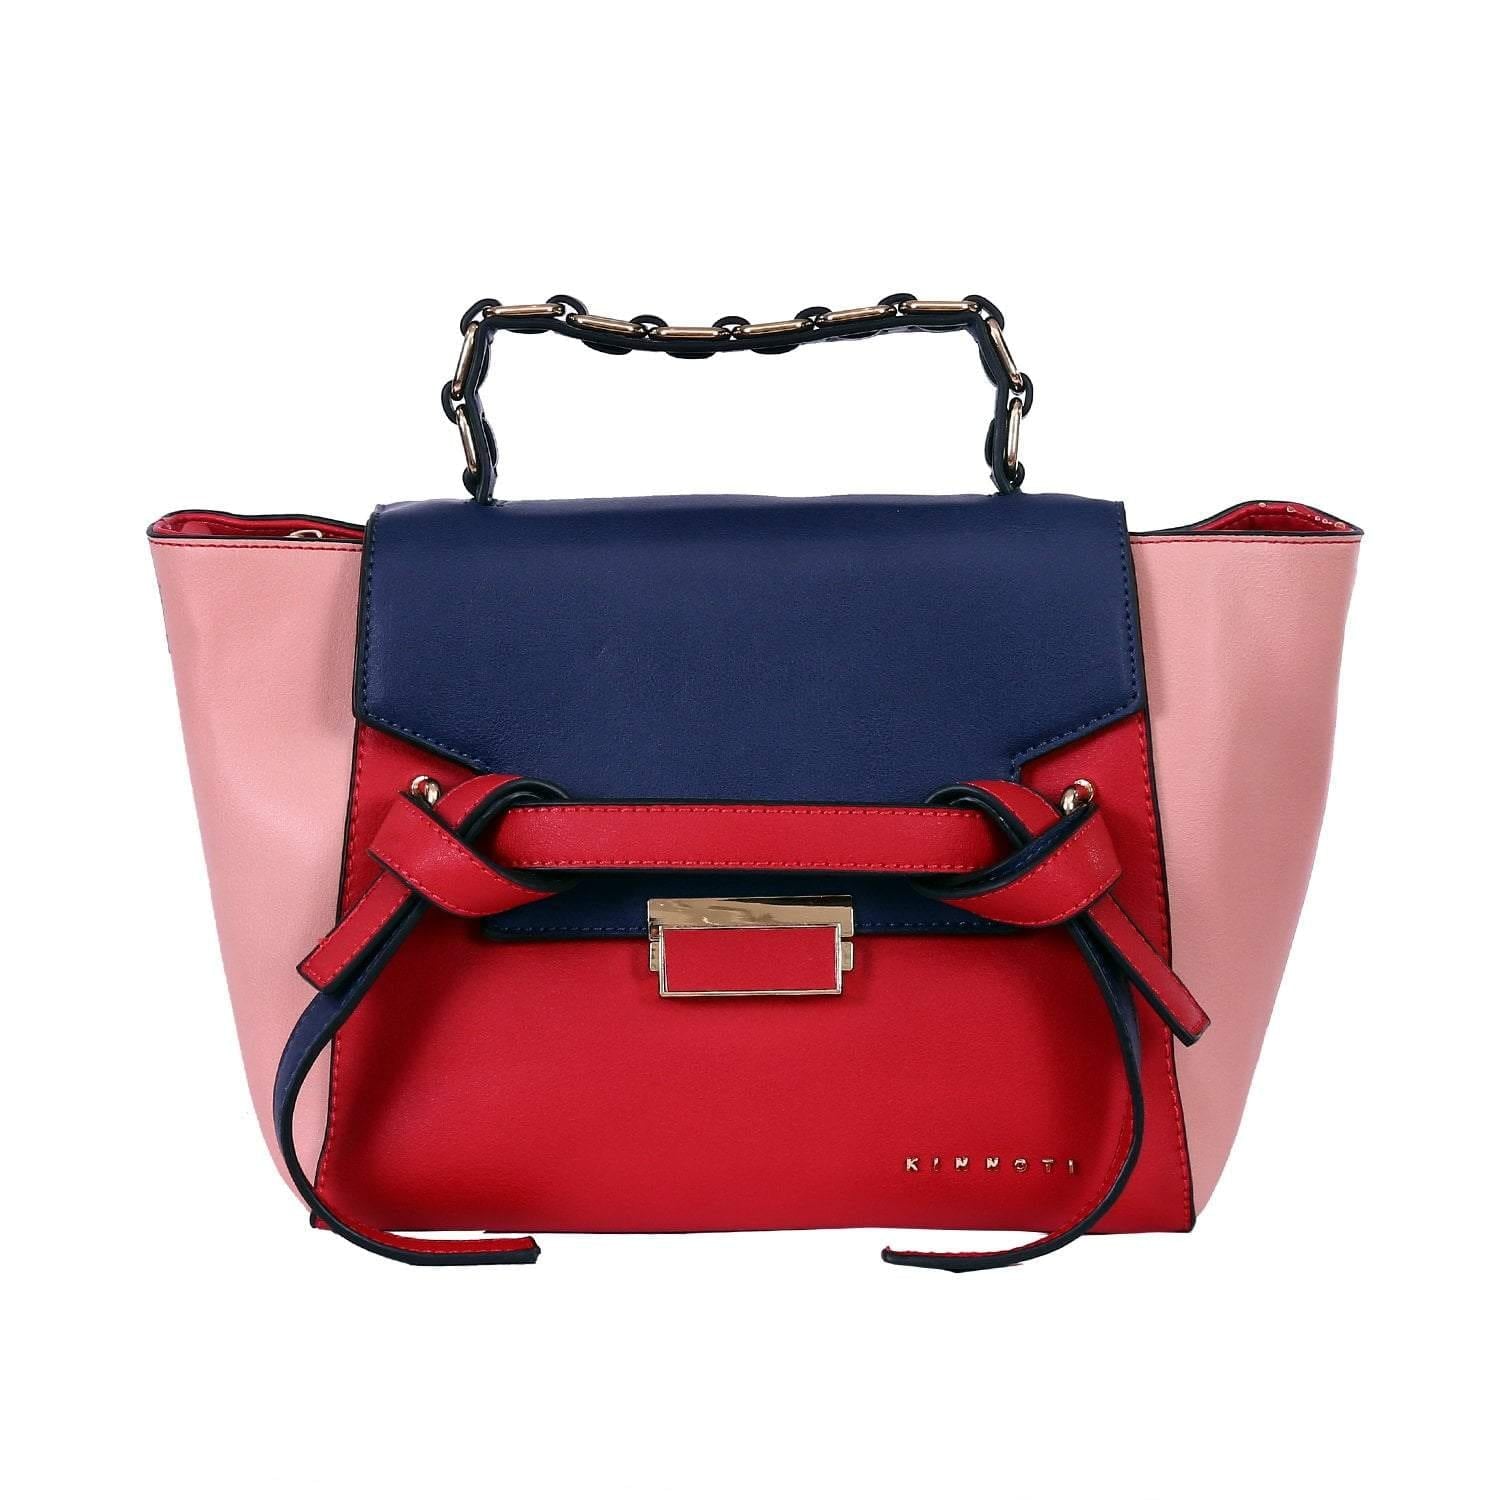 KINNOTI Handbags Multicolor Satchel Handbag